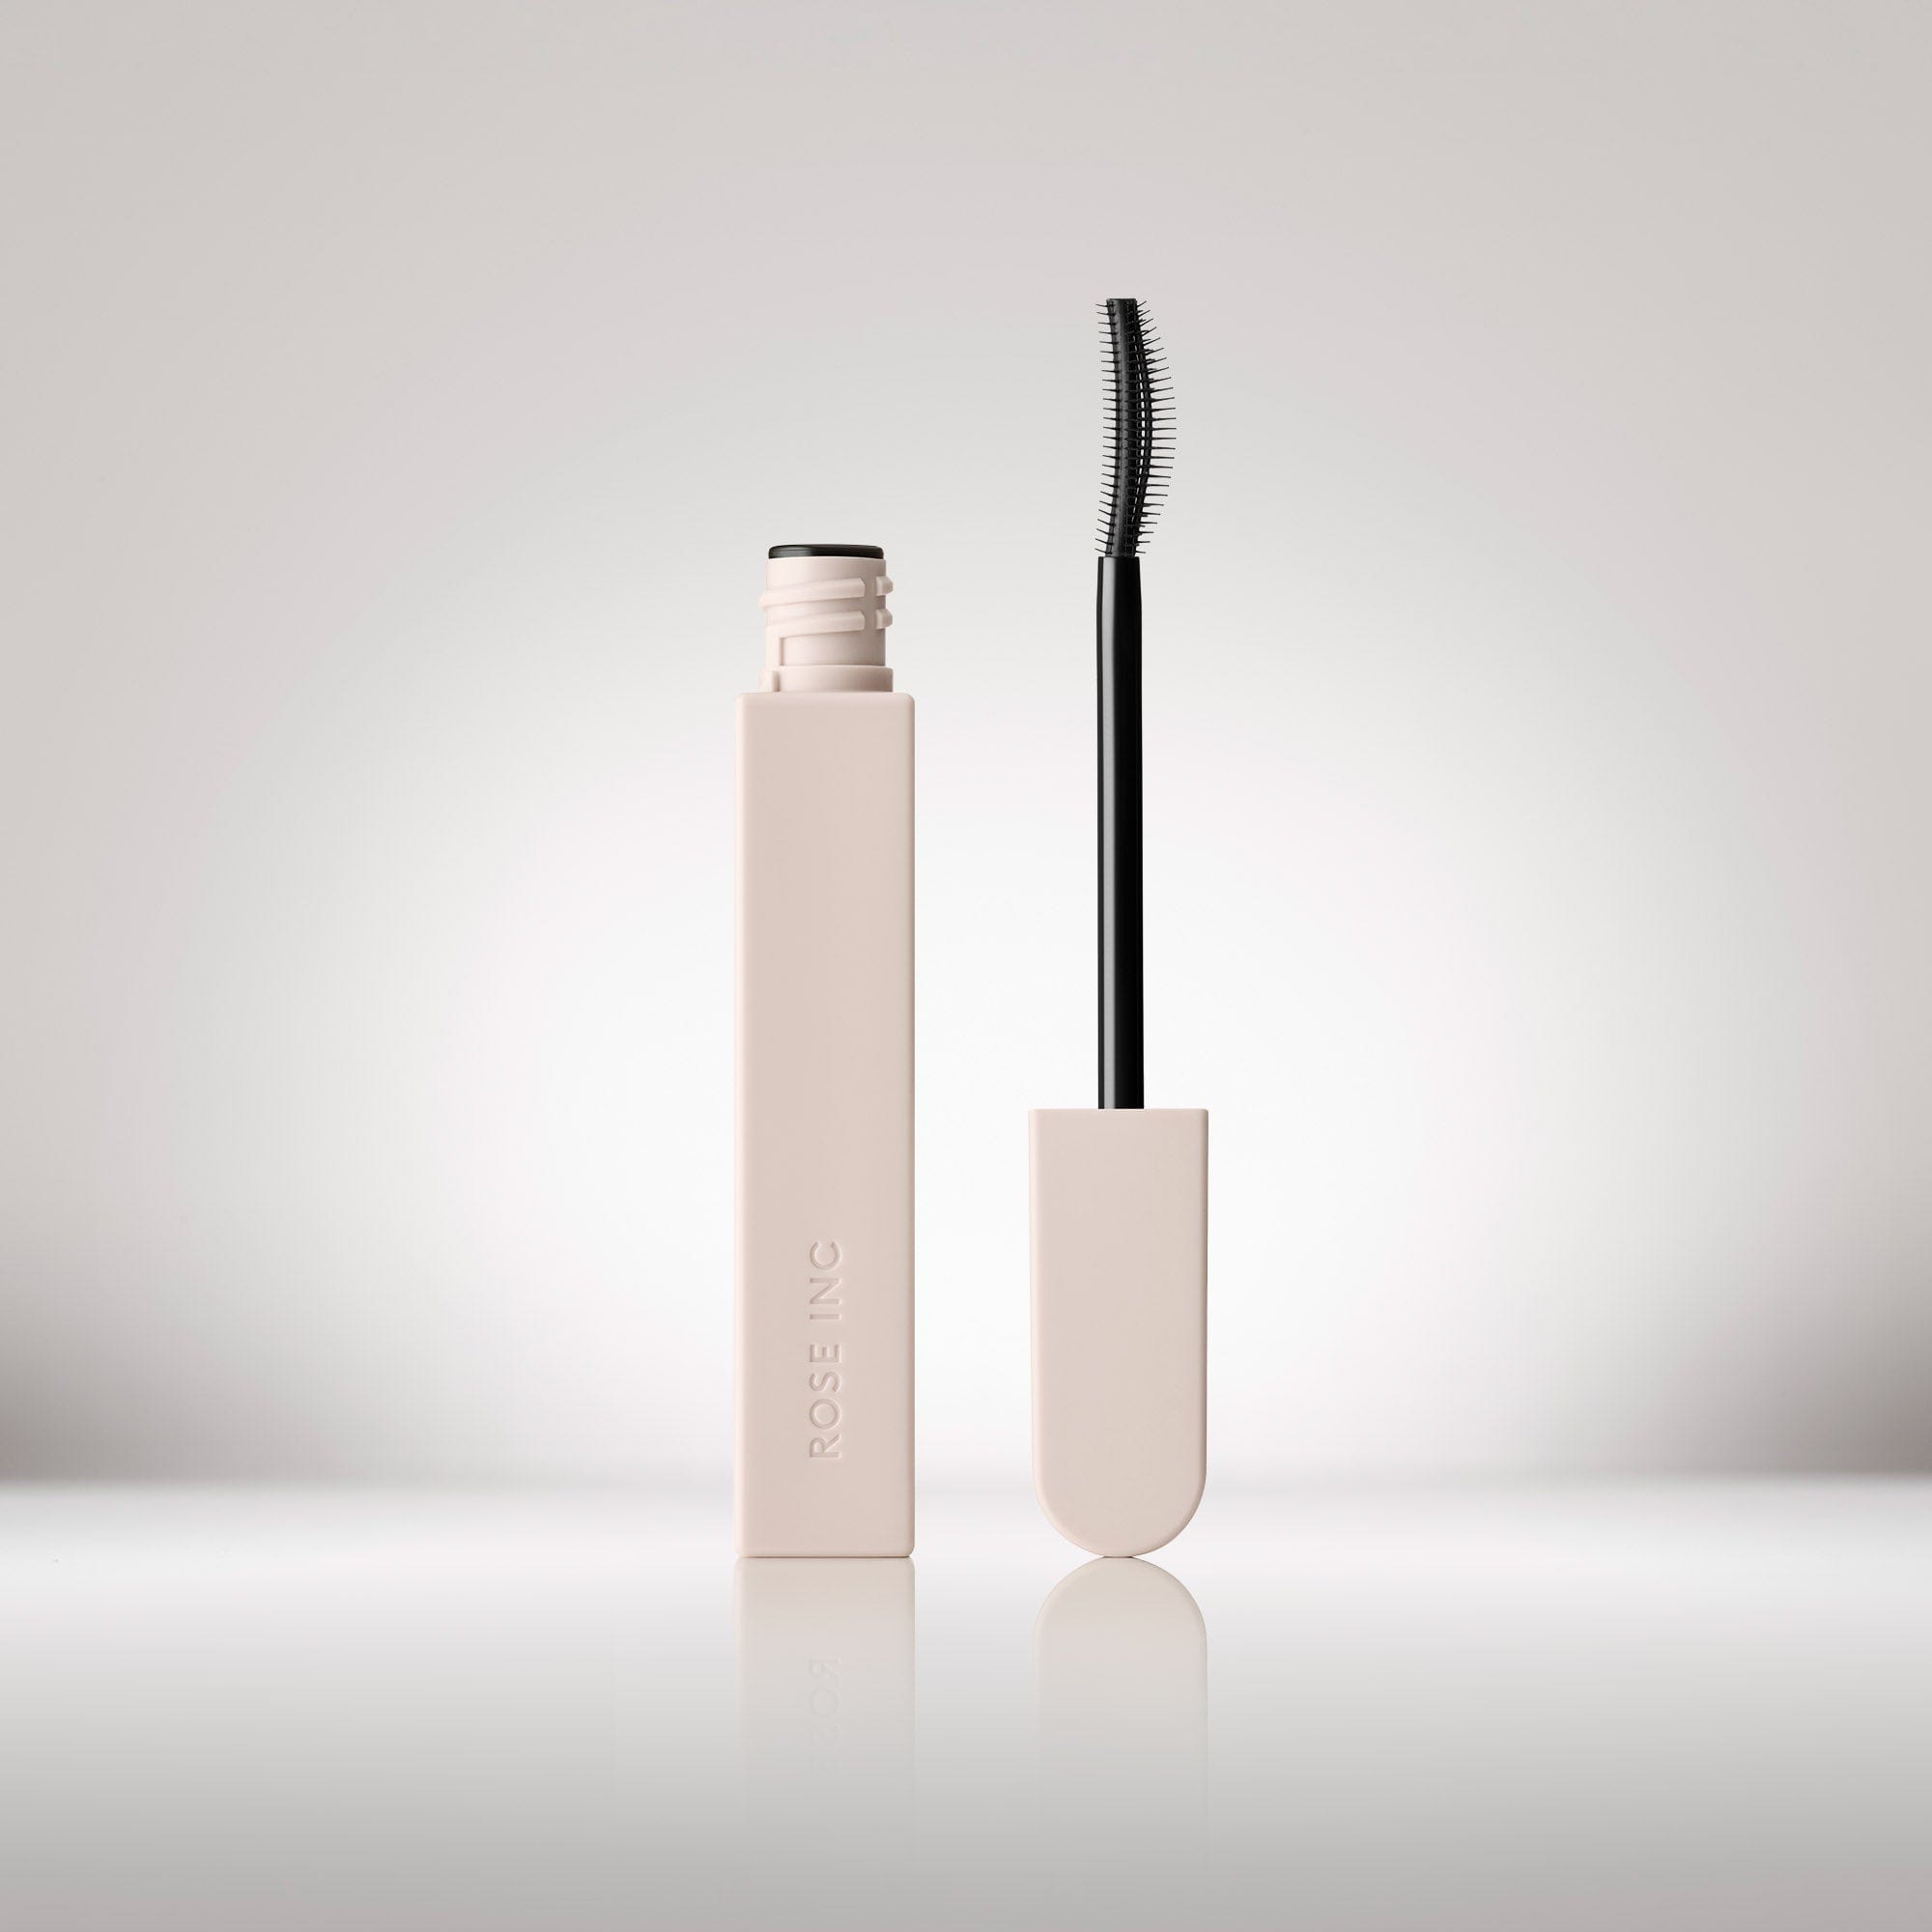 Image of the Ultra-Black Lash Lift Serum Mascara tube and wand